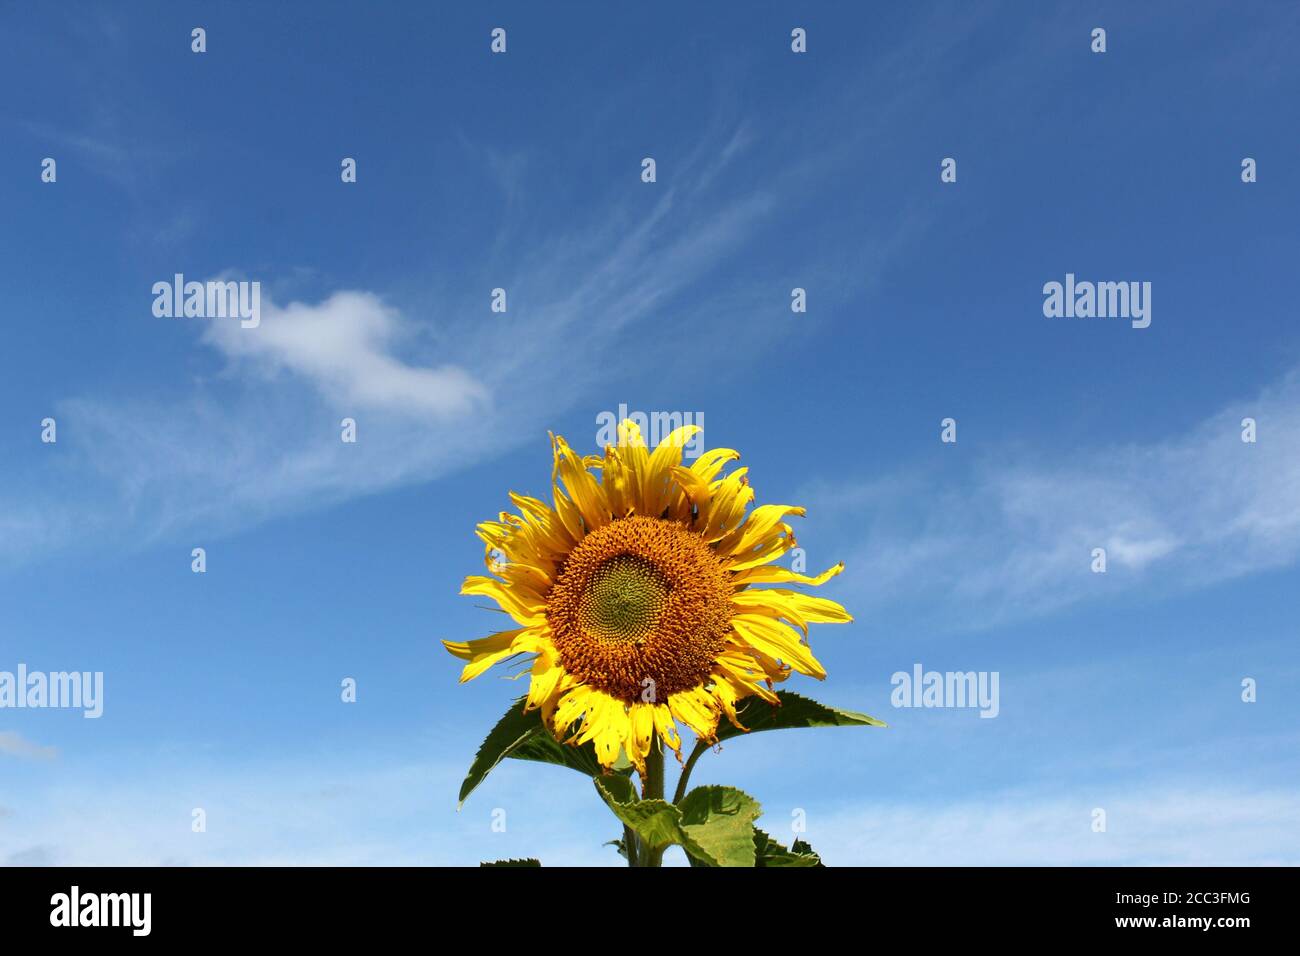 Sunflower on blue sky background Stock Photo